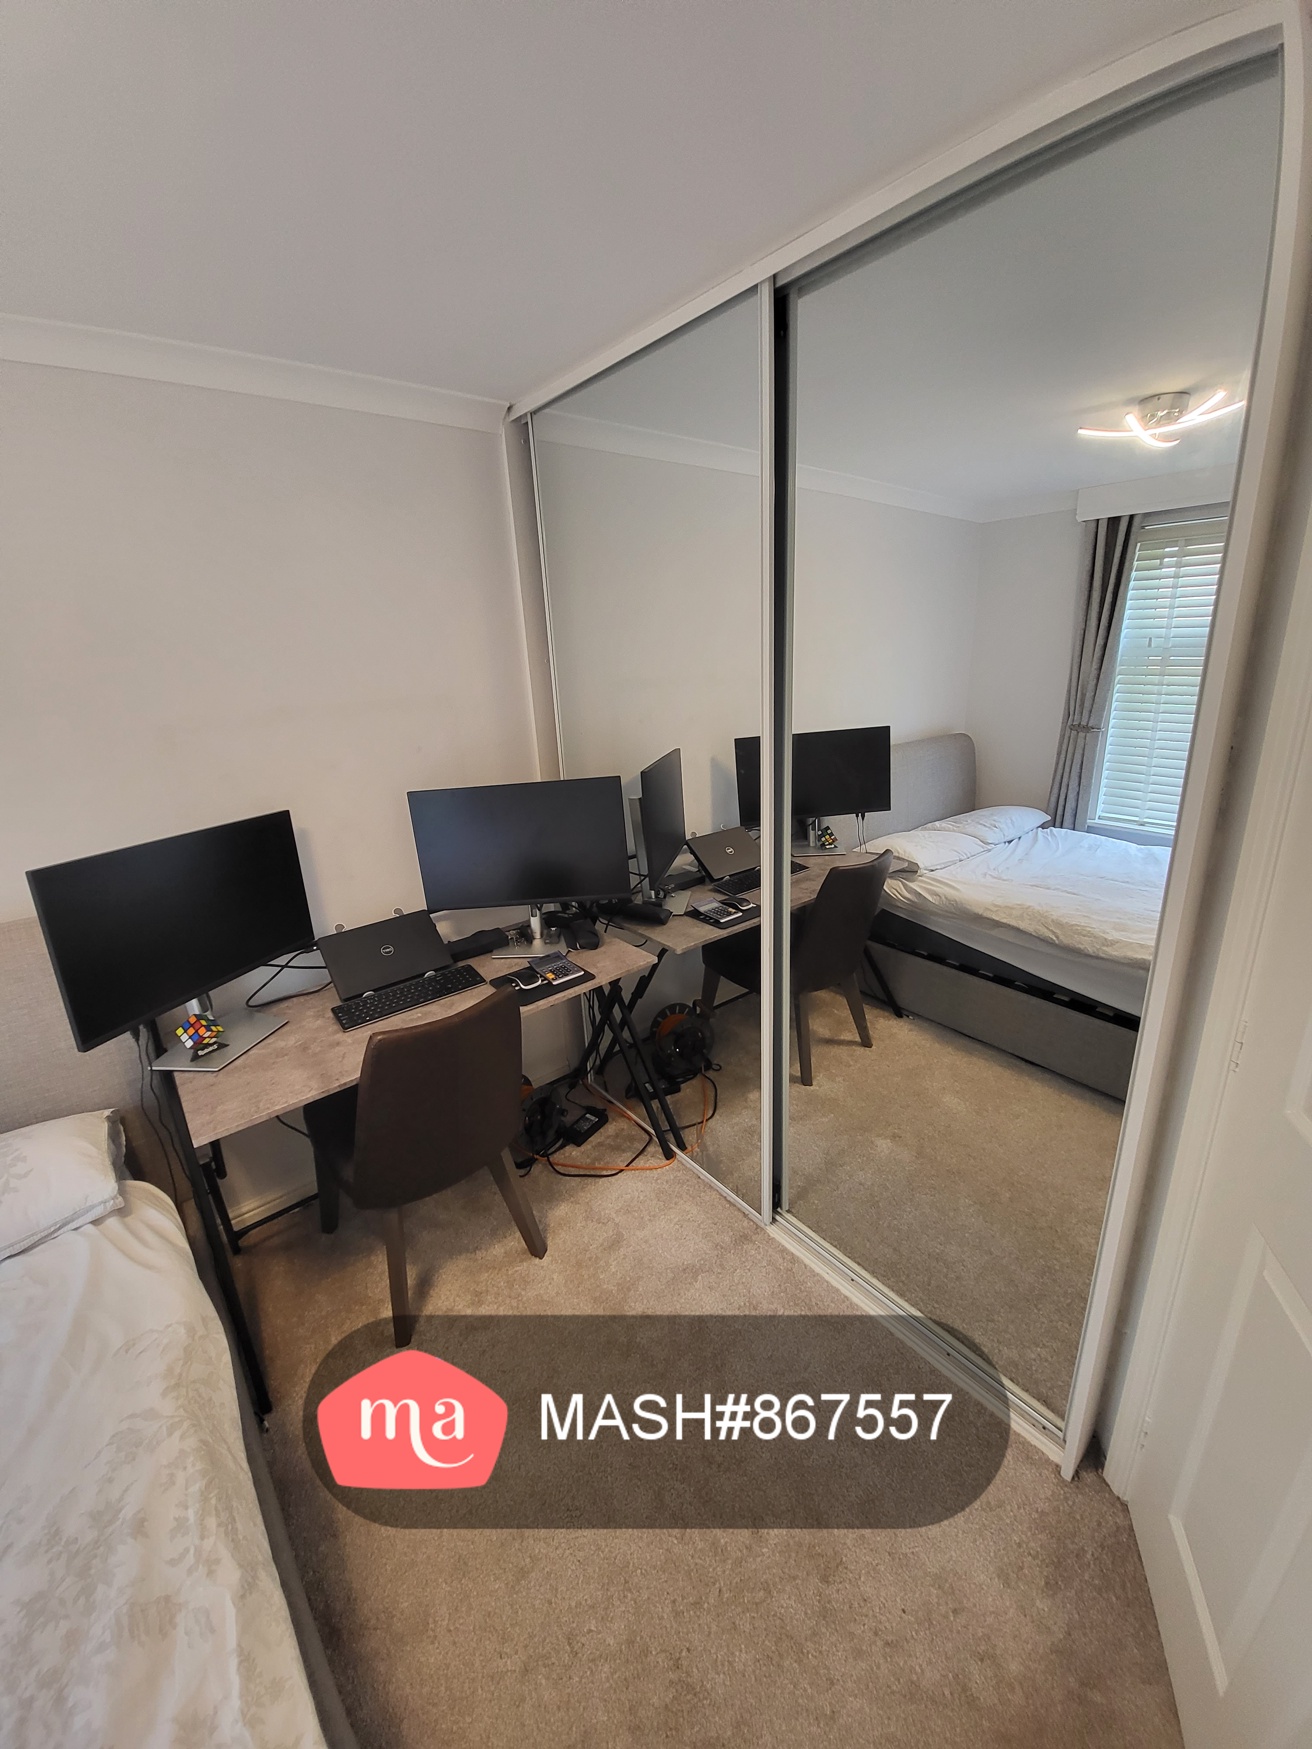 2 Bedroom Flat to rent in Warwick - Mashroom